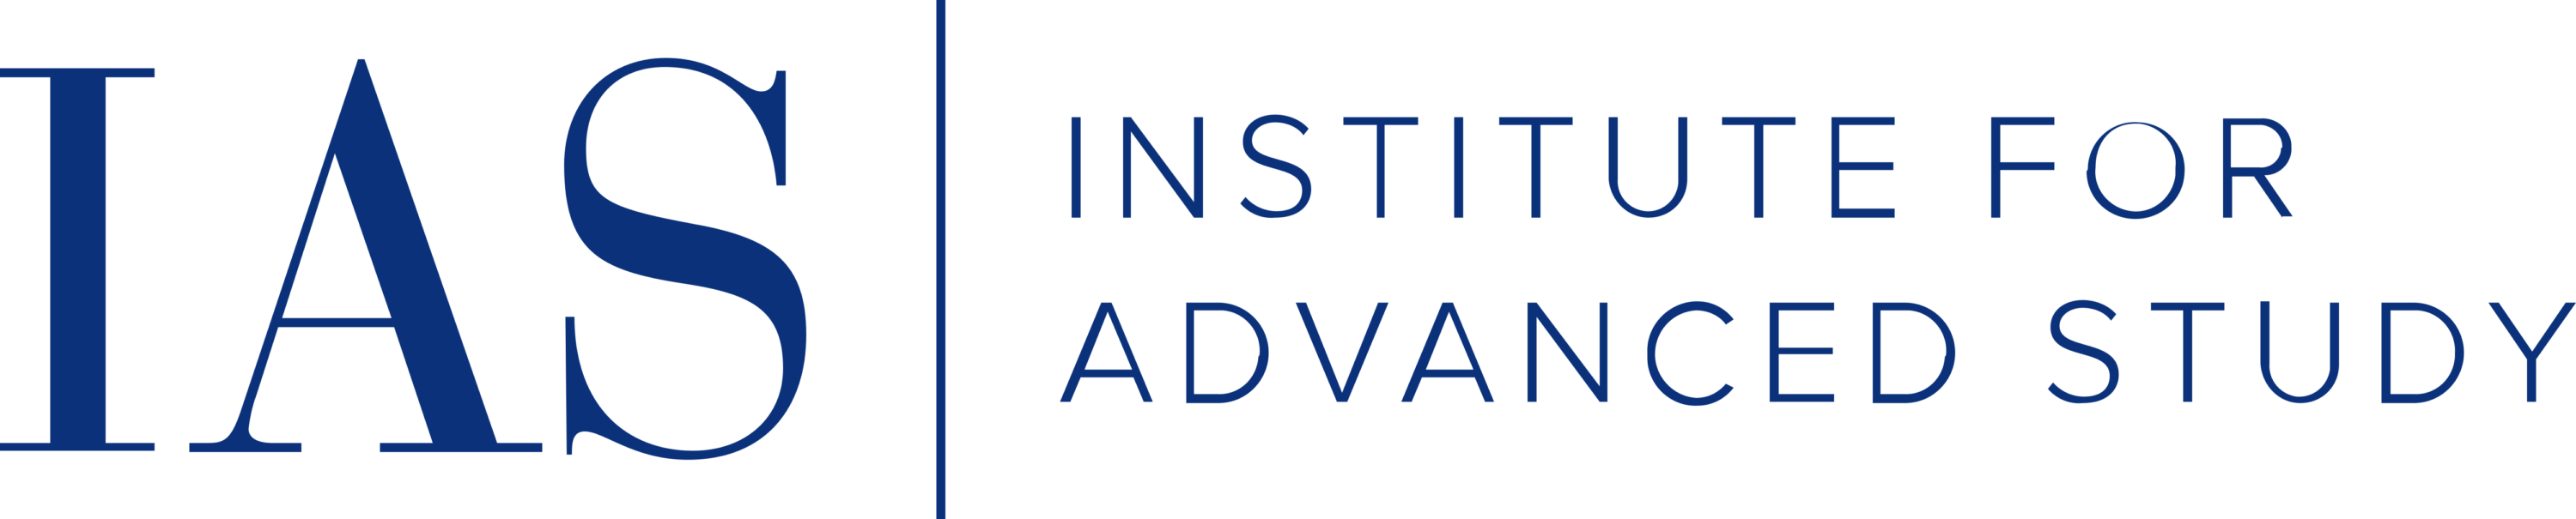 Institute for Advanced Study Logo